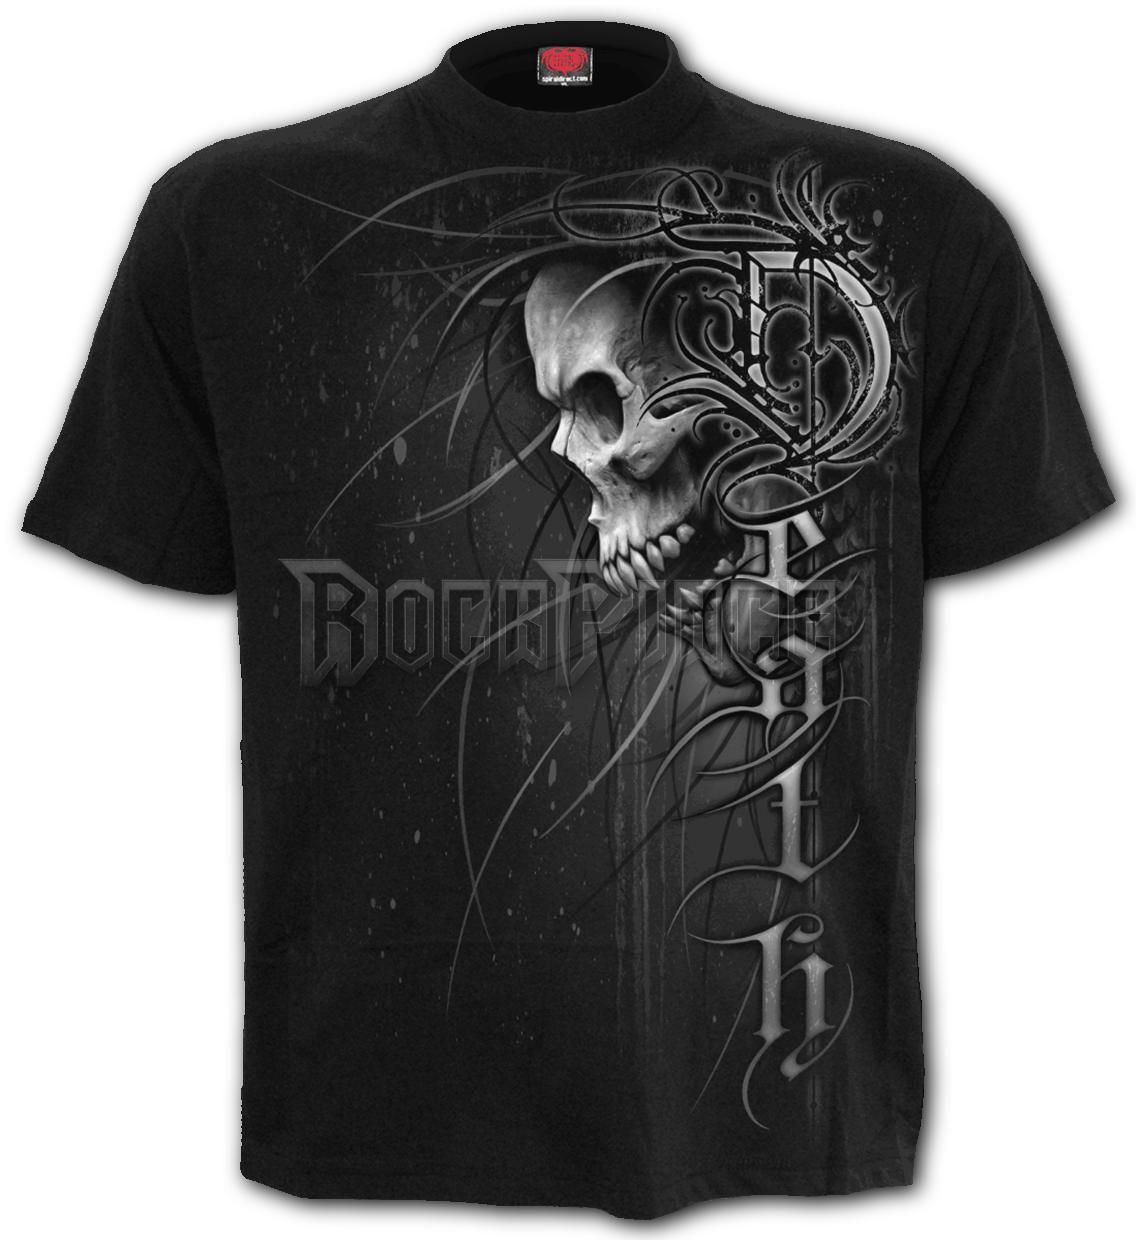 DEATH FOREVER - T-Shirt Black - E036M101